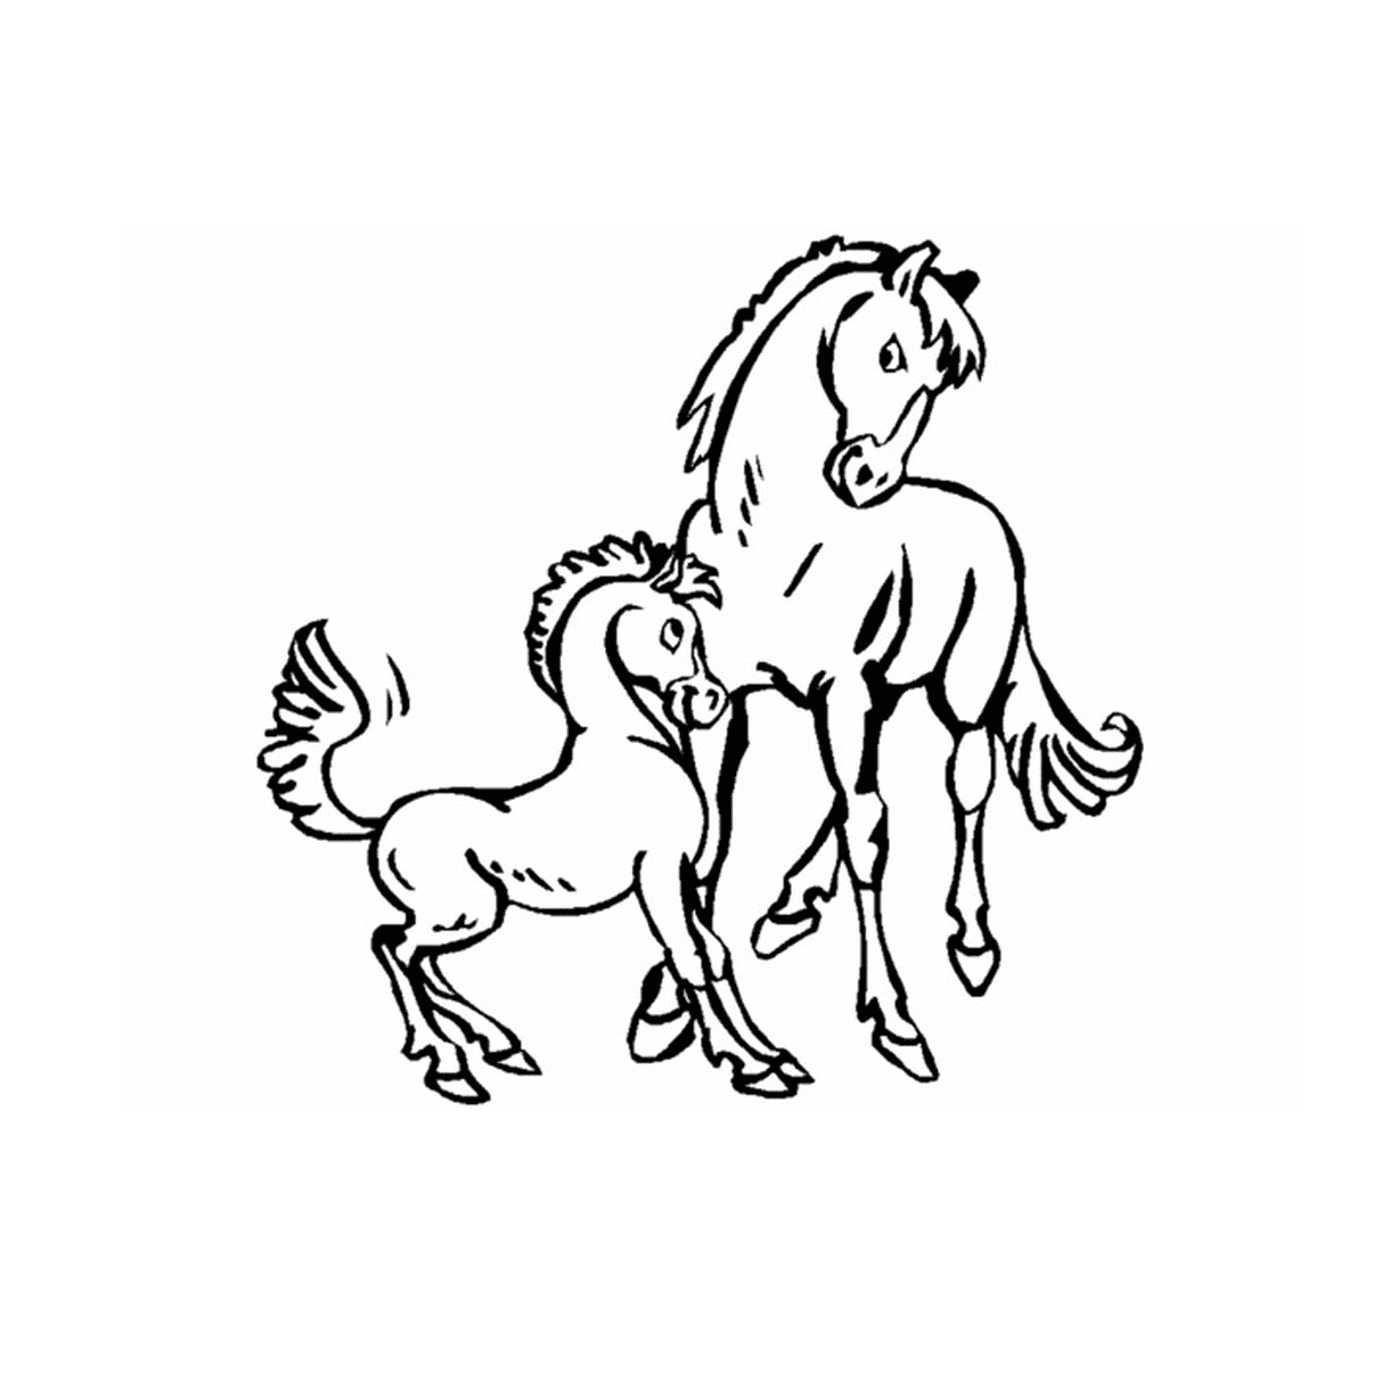  Pony e cavalos, terno vínculo familiar 